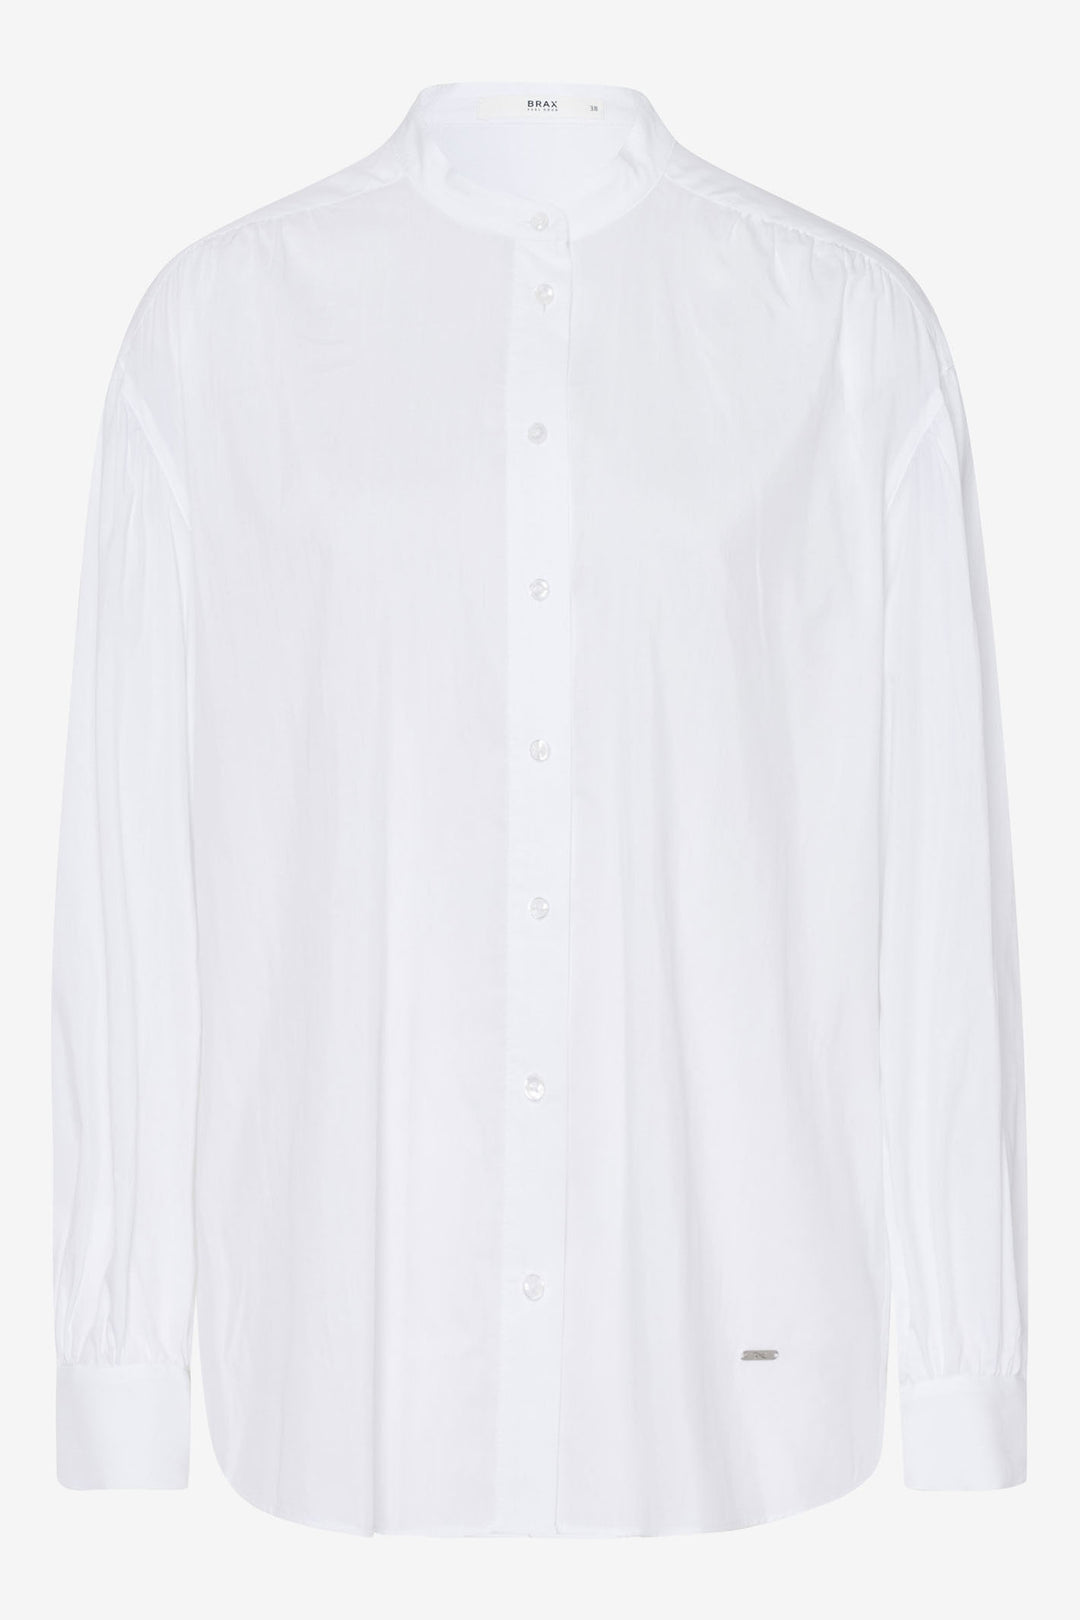 Brax Viv 49-5444 99 White Collarless Shirt - Dotique Chesterfield